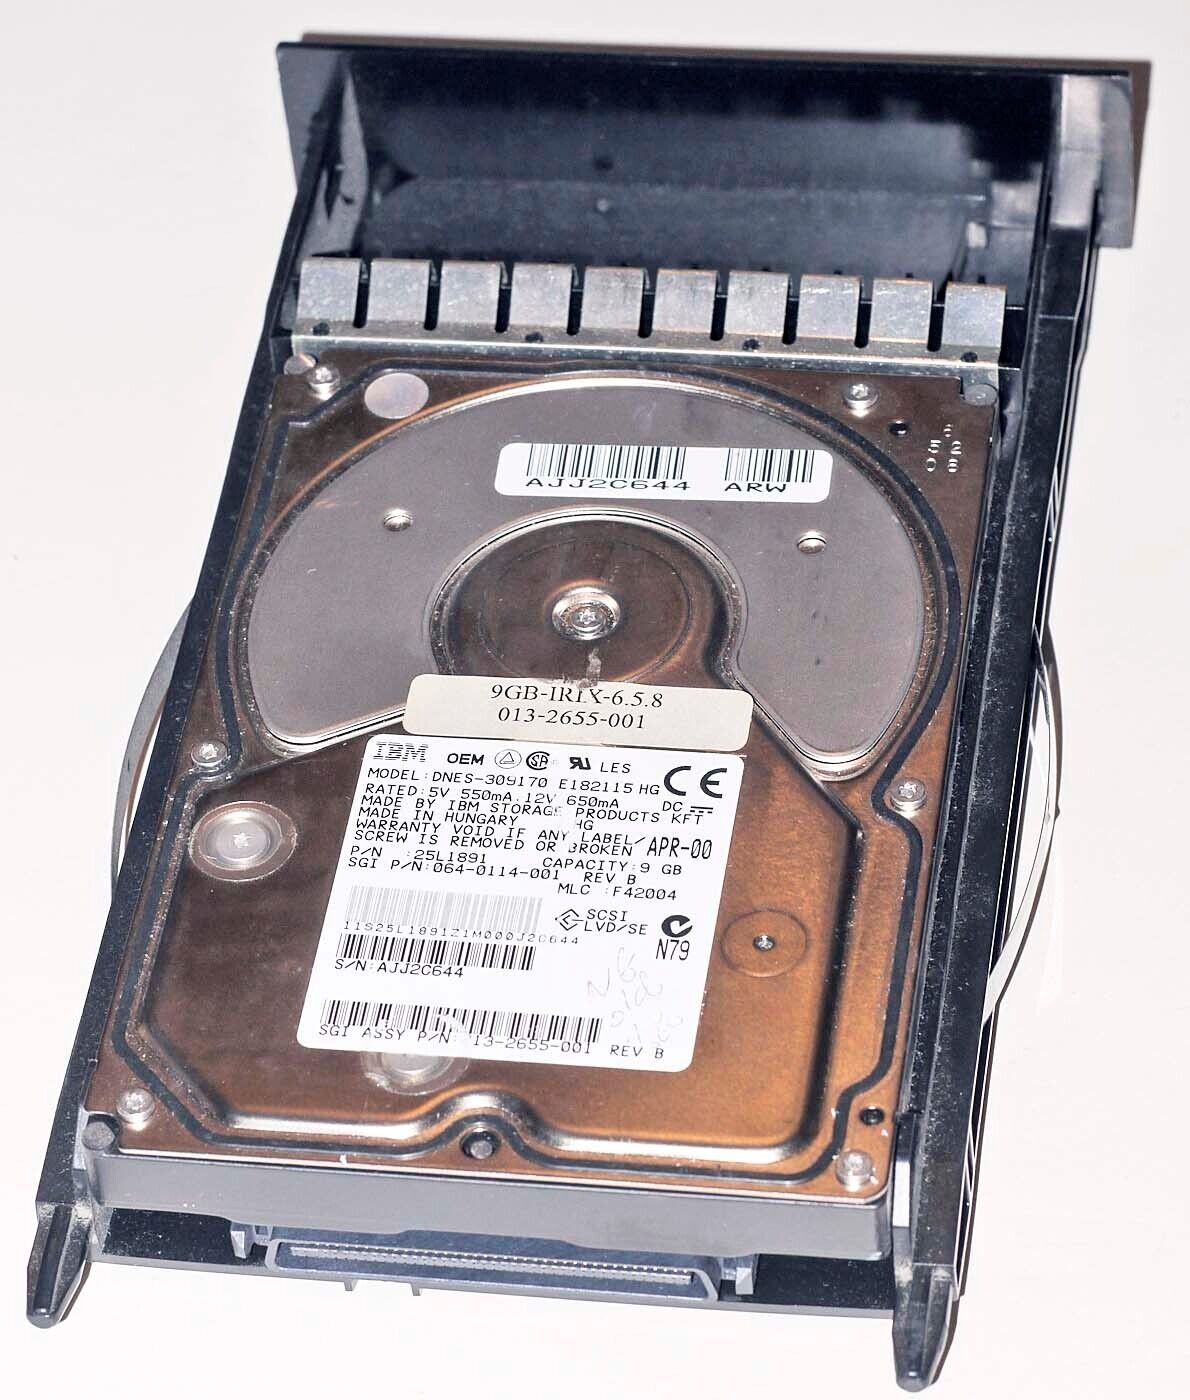 IBM Model: DNES-309170 E 182115 HG Hard Drive 9GB SCSI in Tray from SGI Computer